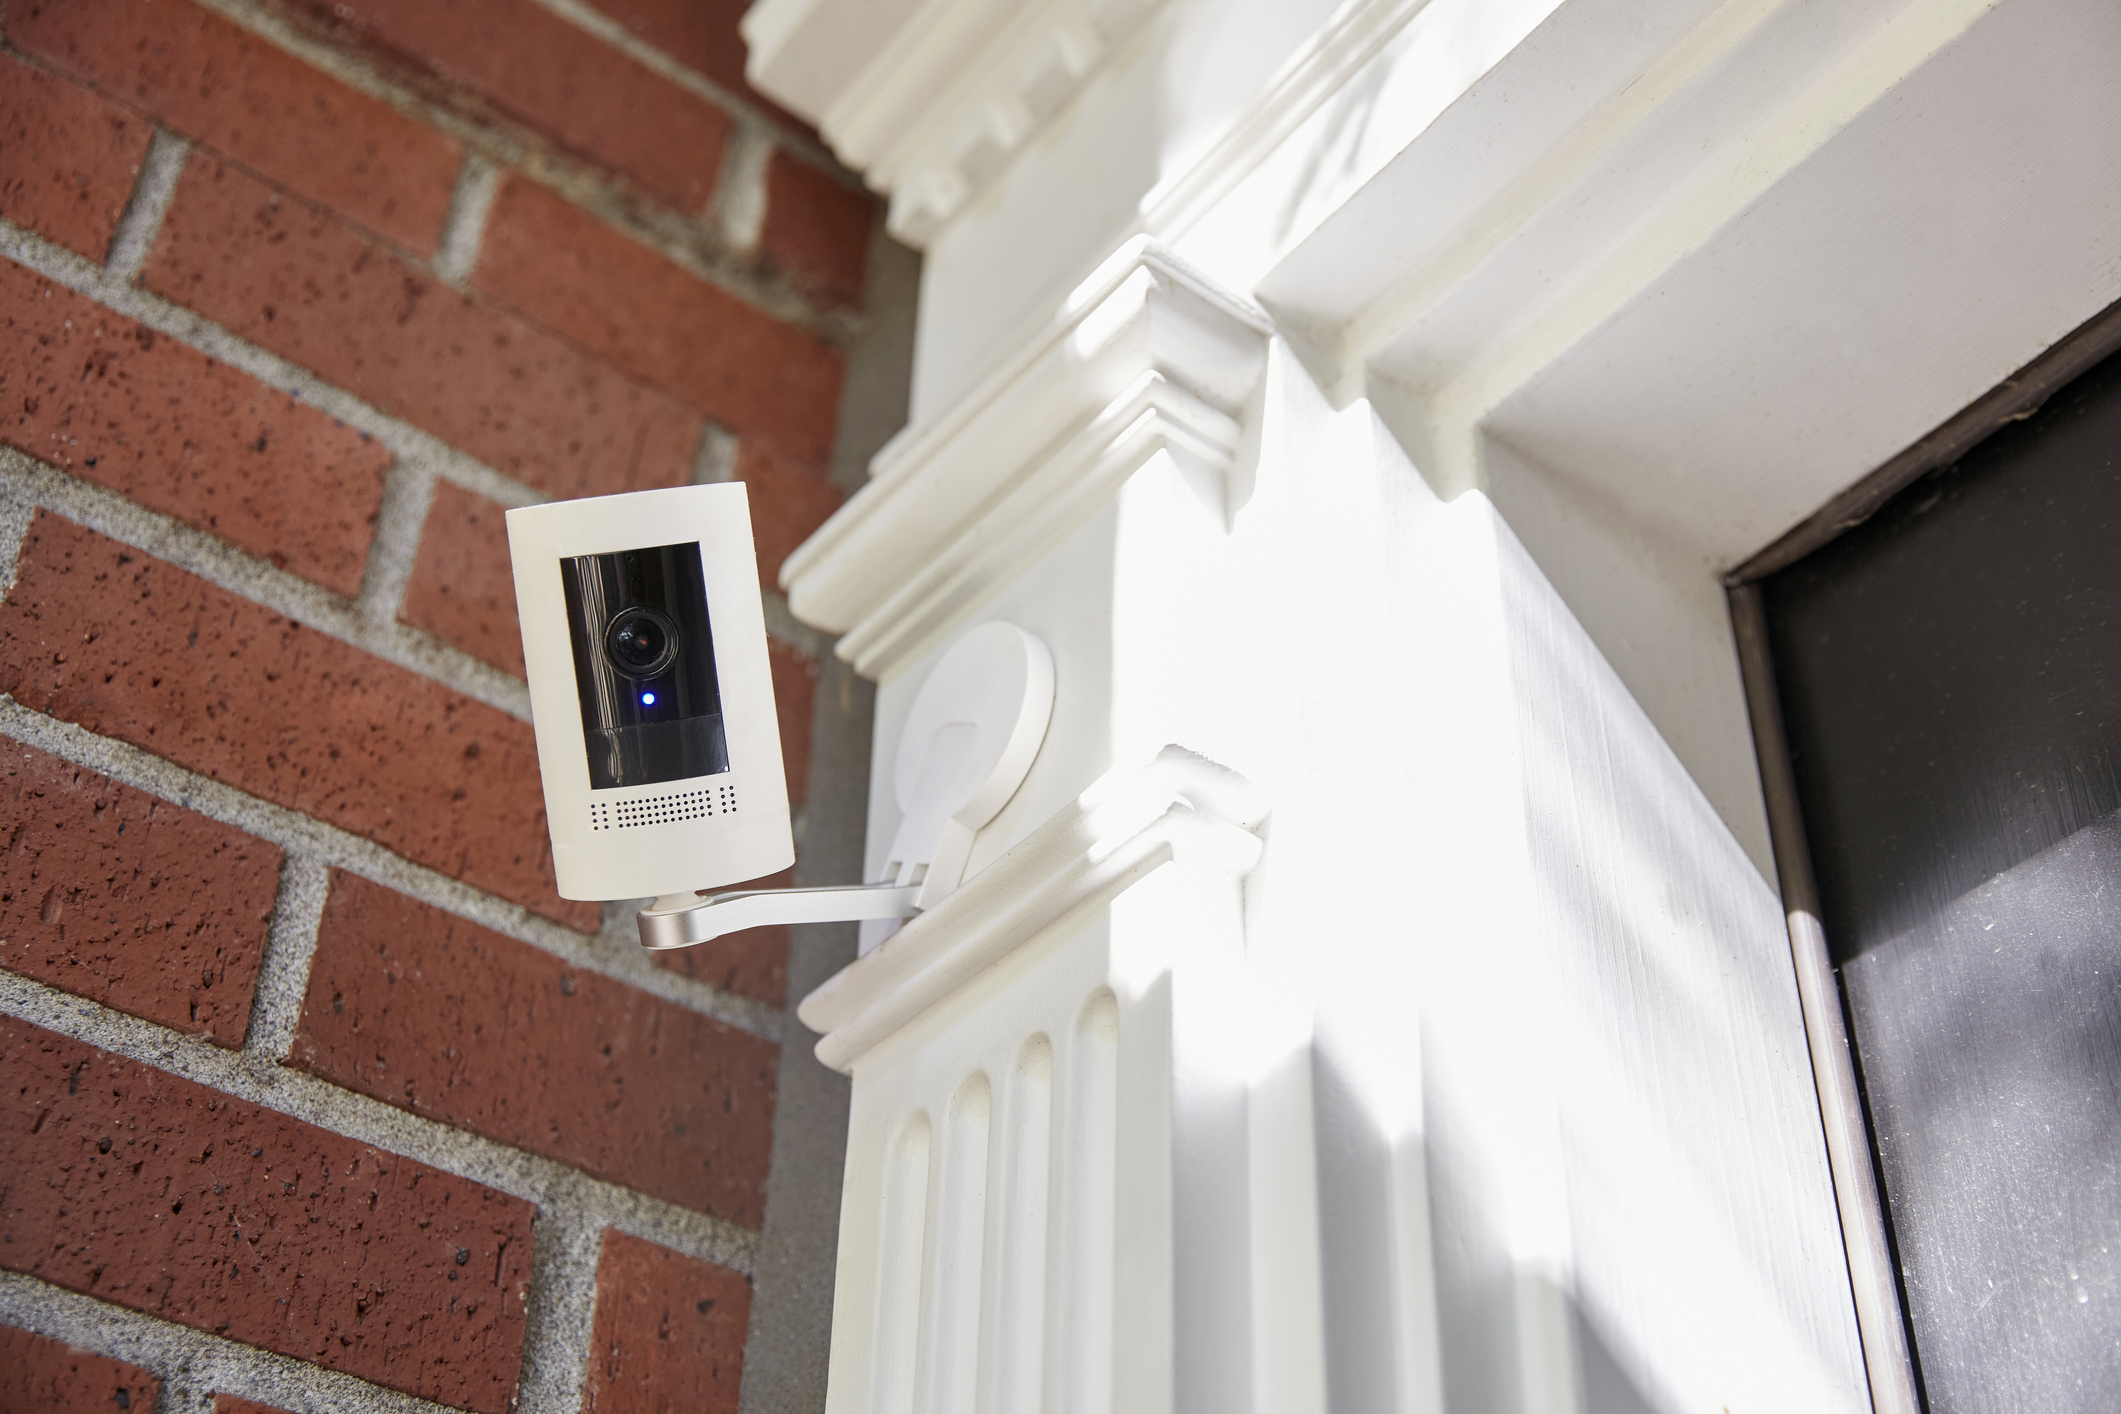 A house has a security camera